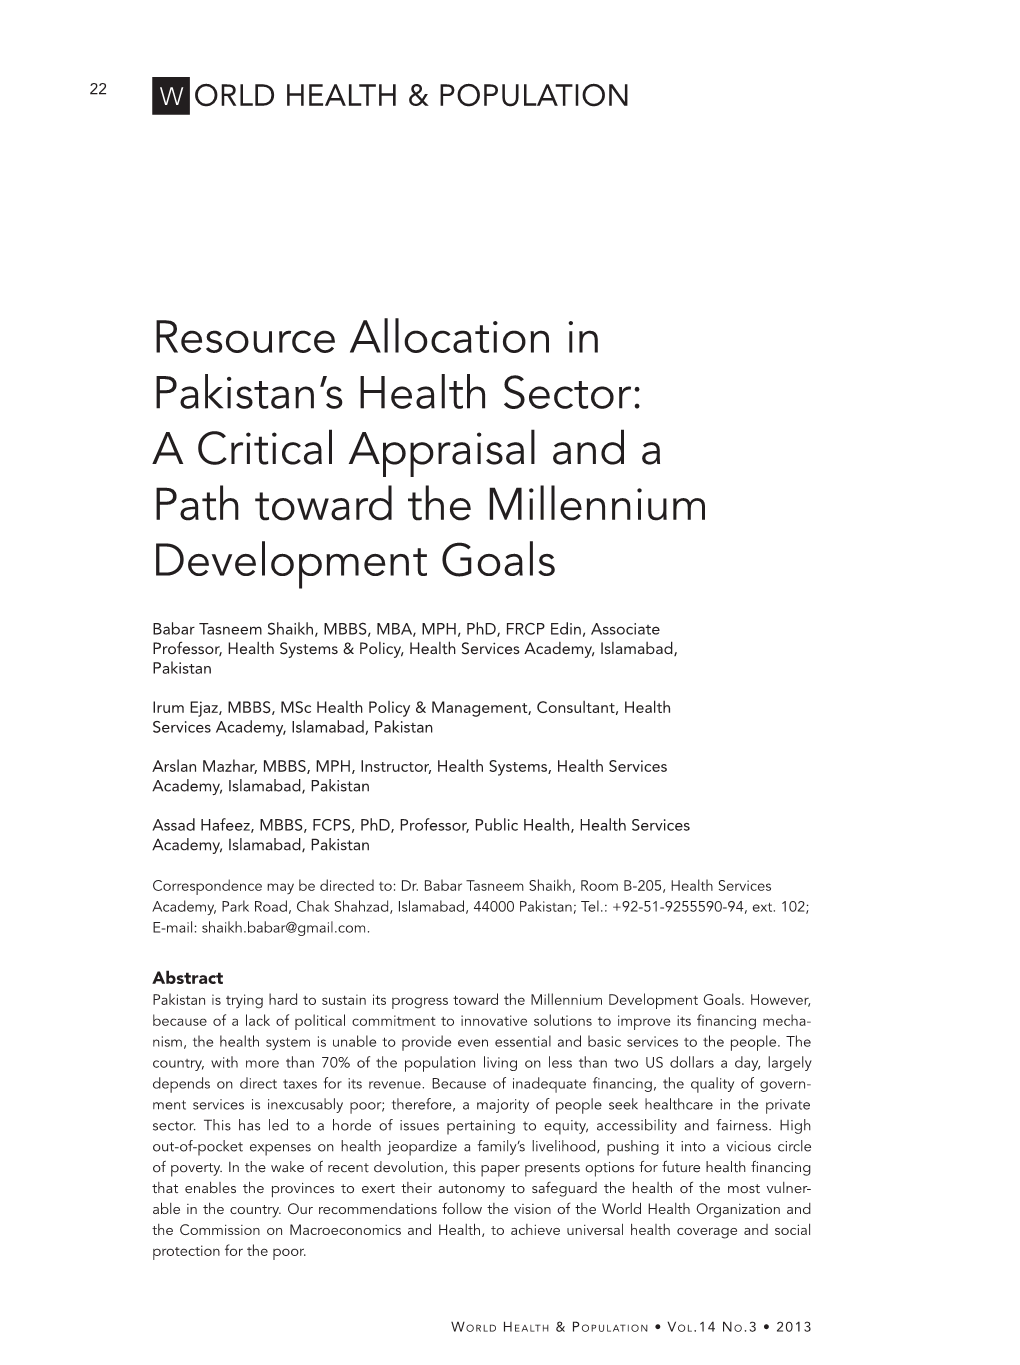 Resource Allocation in Pakistan's Health Sector: a Critical Appraisal and a Path Toward the Millennium Development Goals